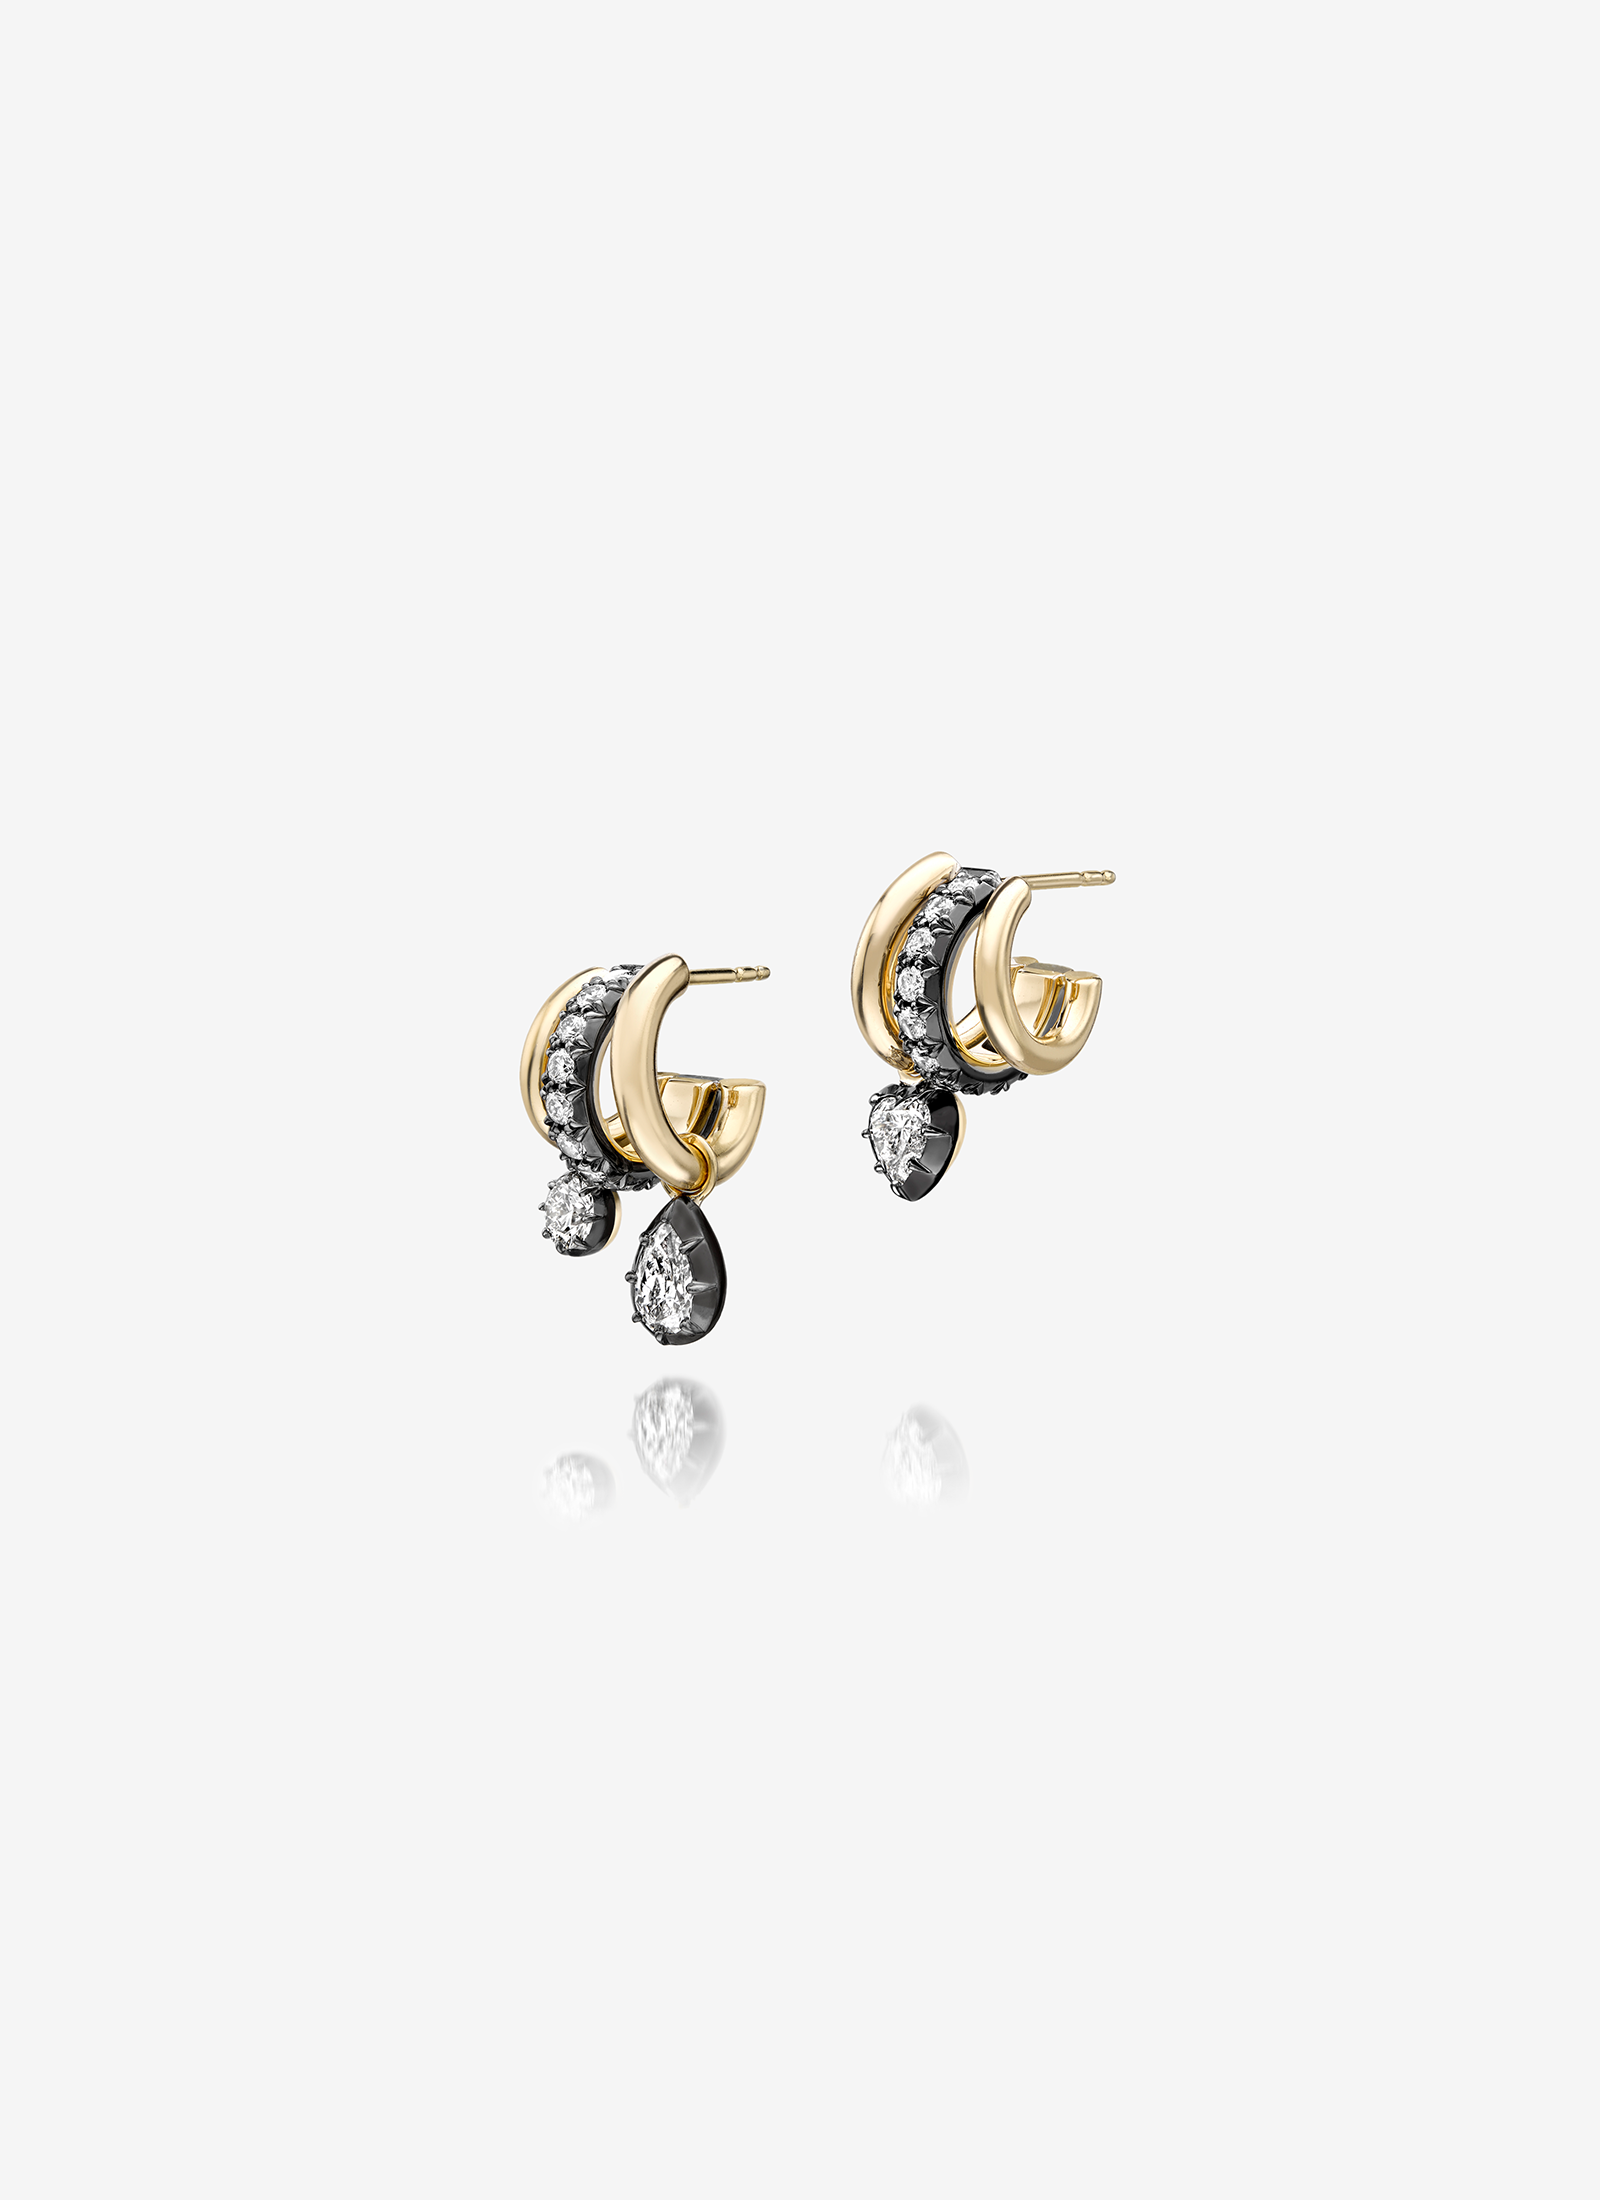 Signature Earrings - Multi-Shape Diamond Tripset Hoops